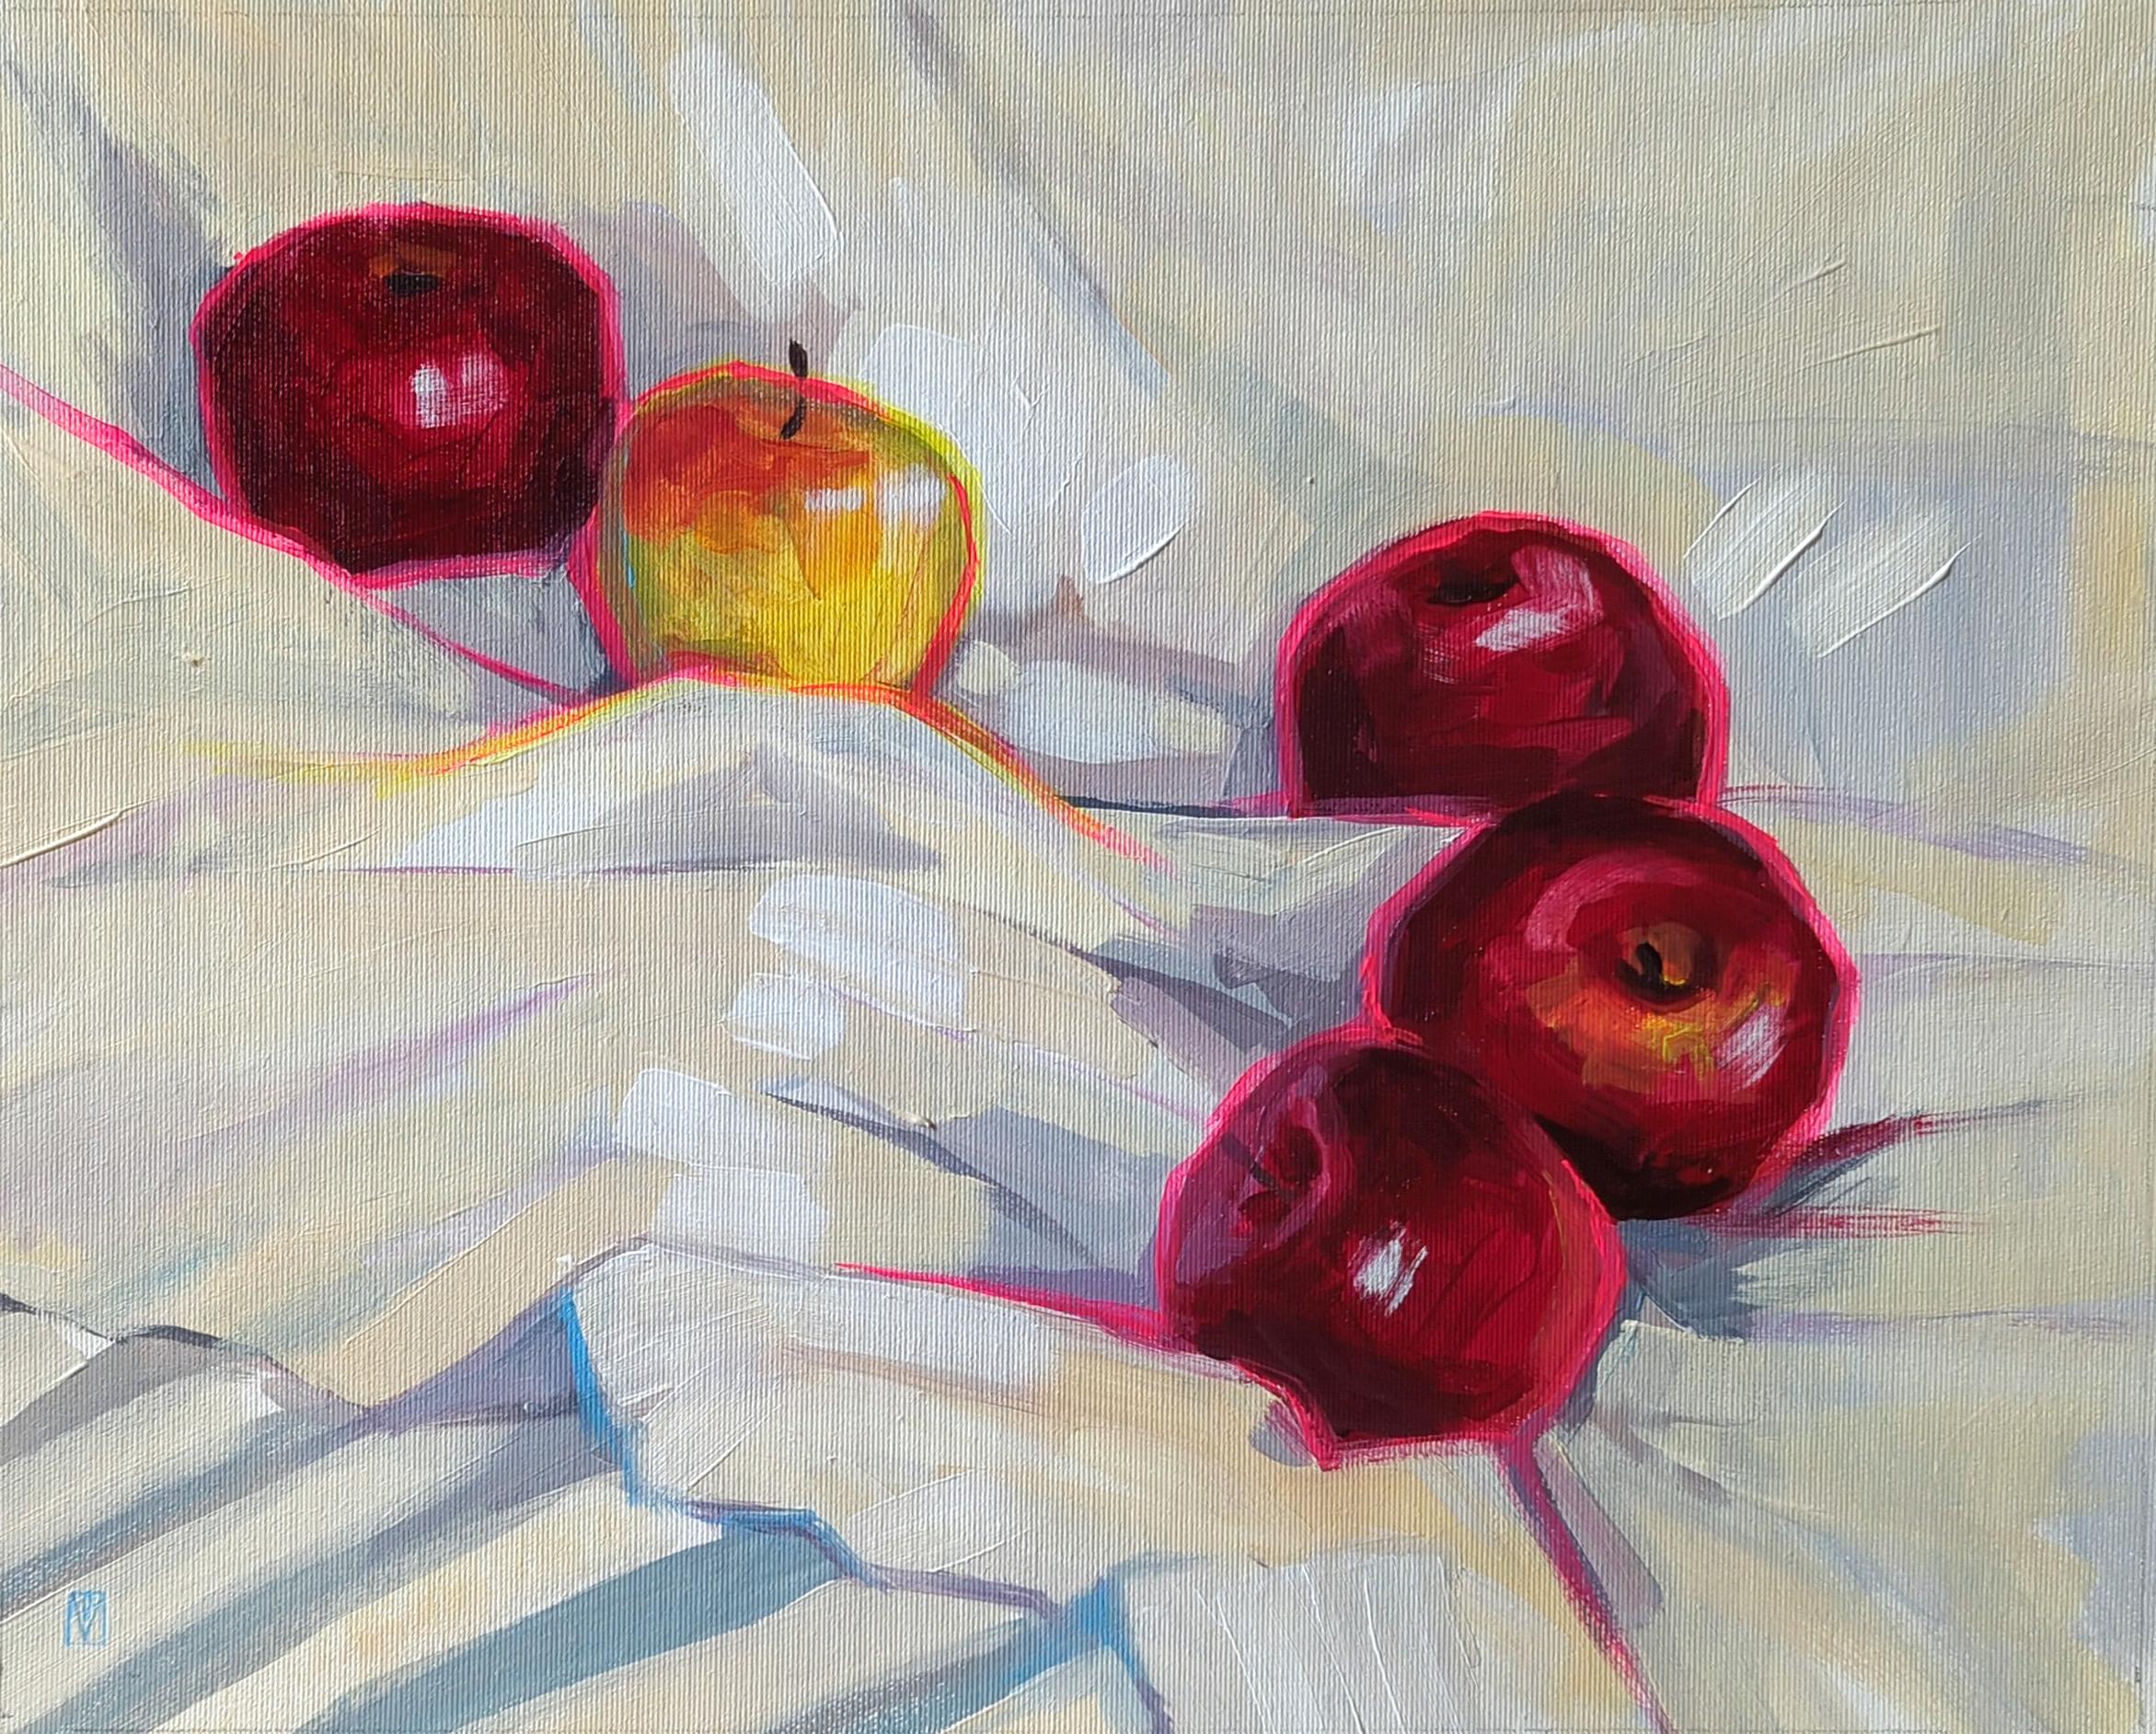 Olha Vlasova Still-Life Painting - Snow White's apples